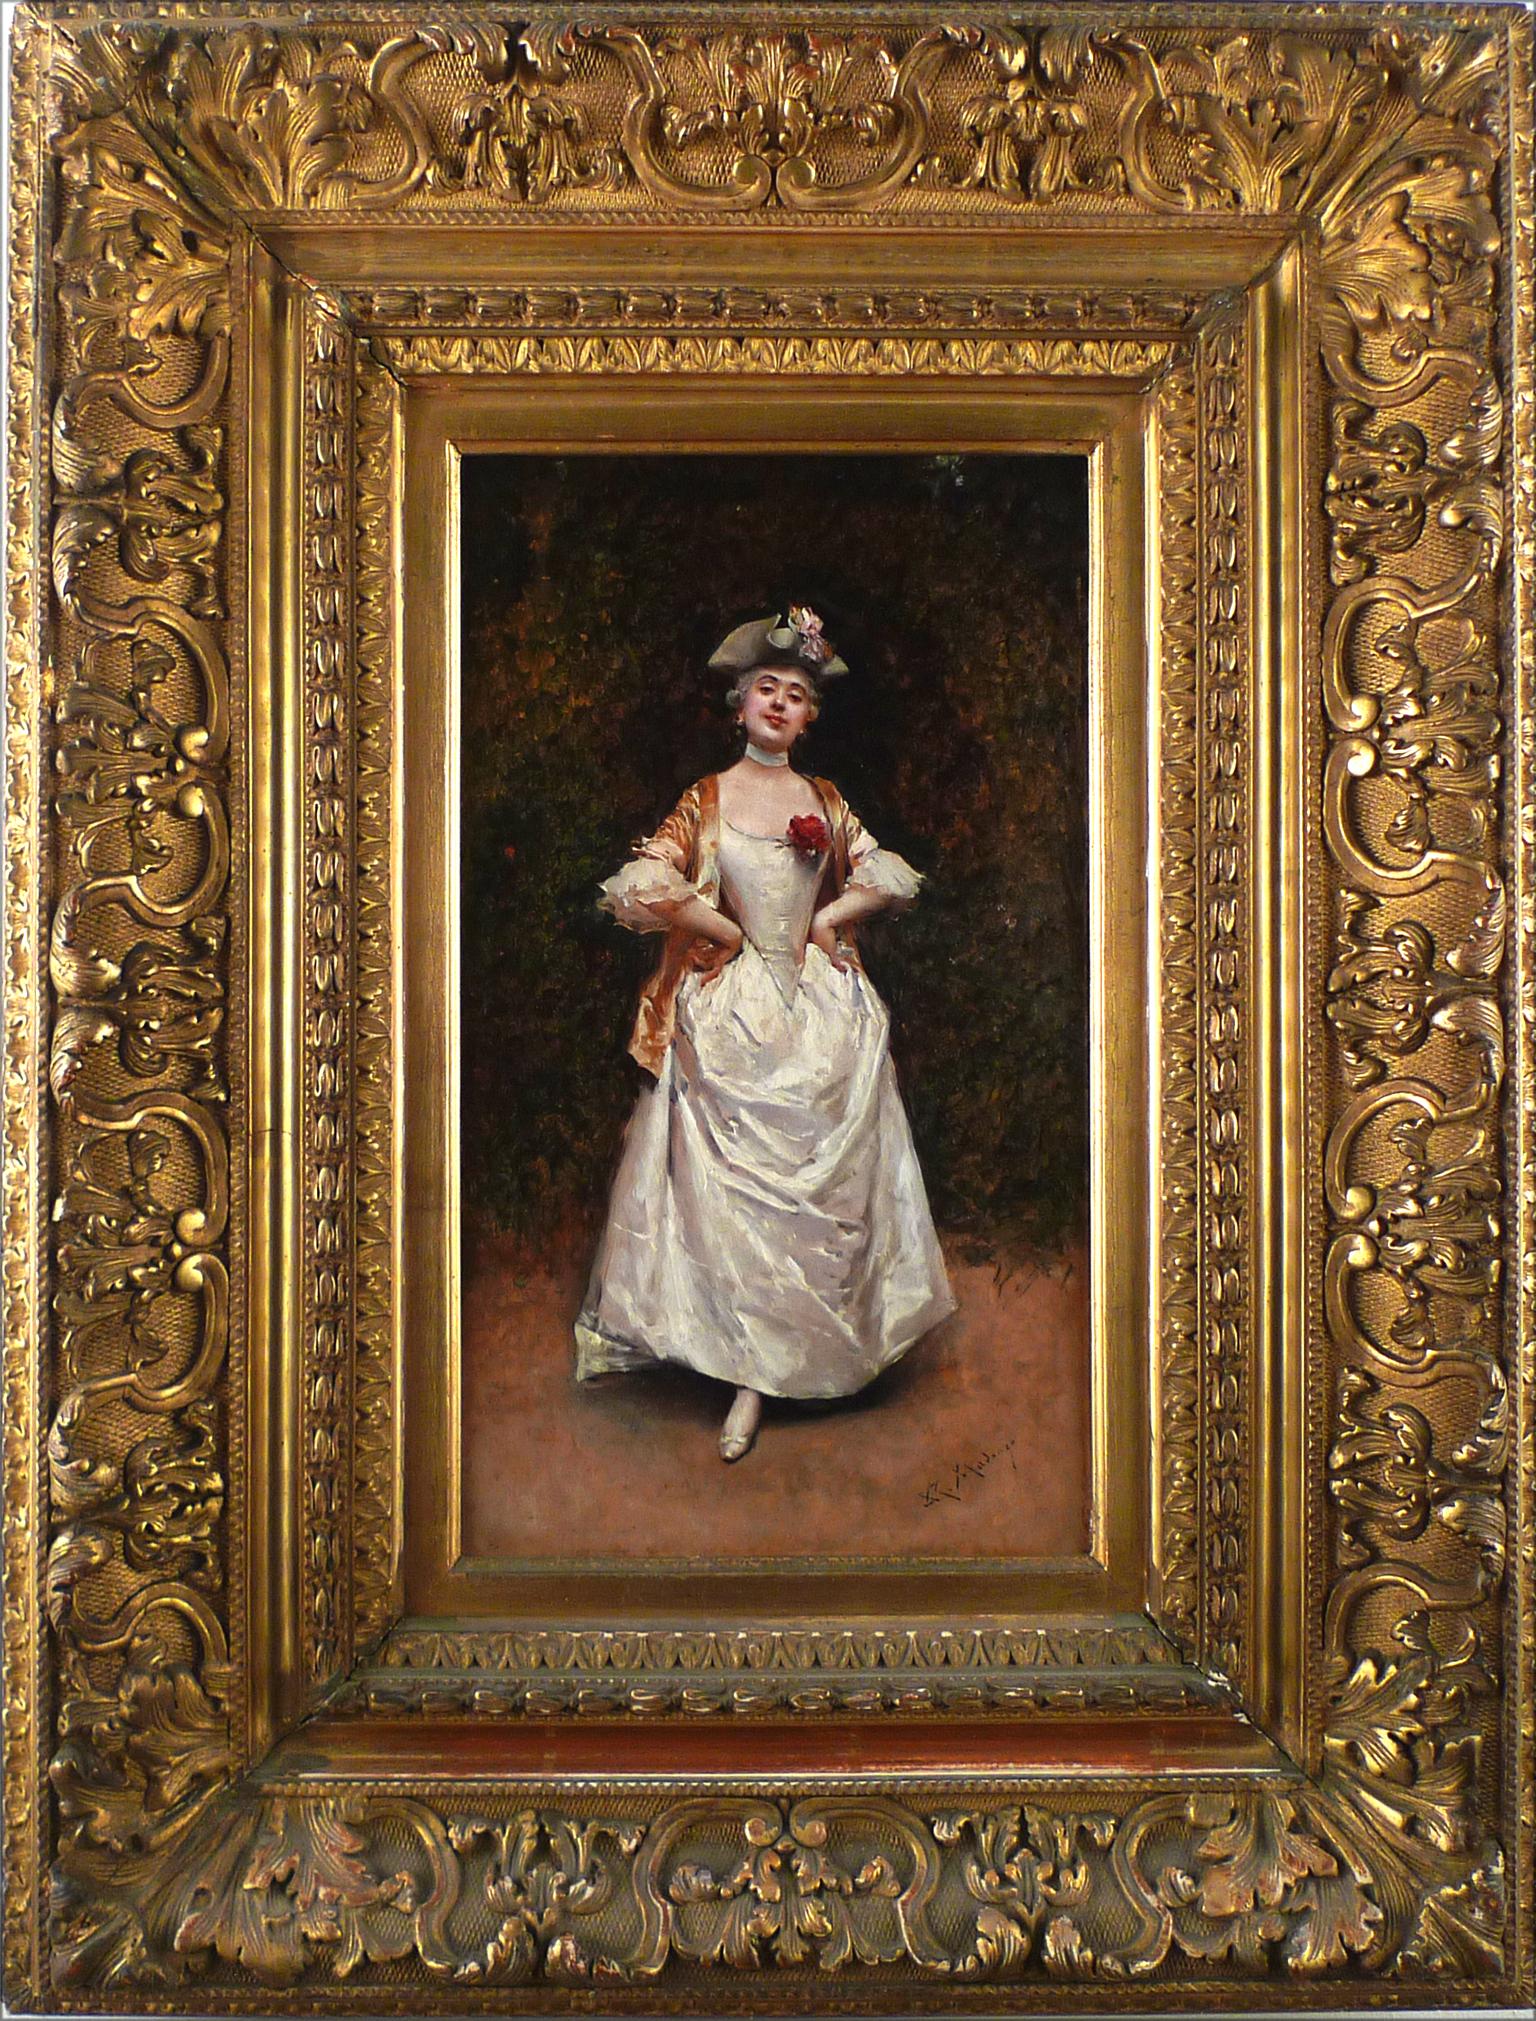 "Aline in Eighteenth-Century Attire", 19th Century Oil on Panel by R. de Madrazo